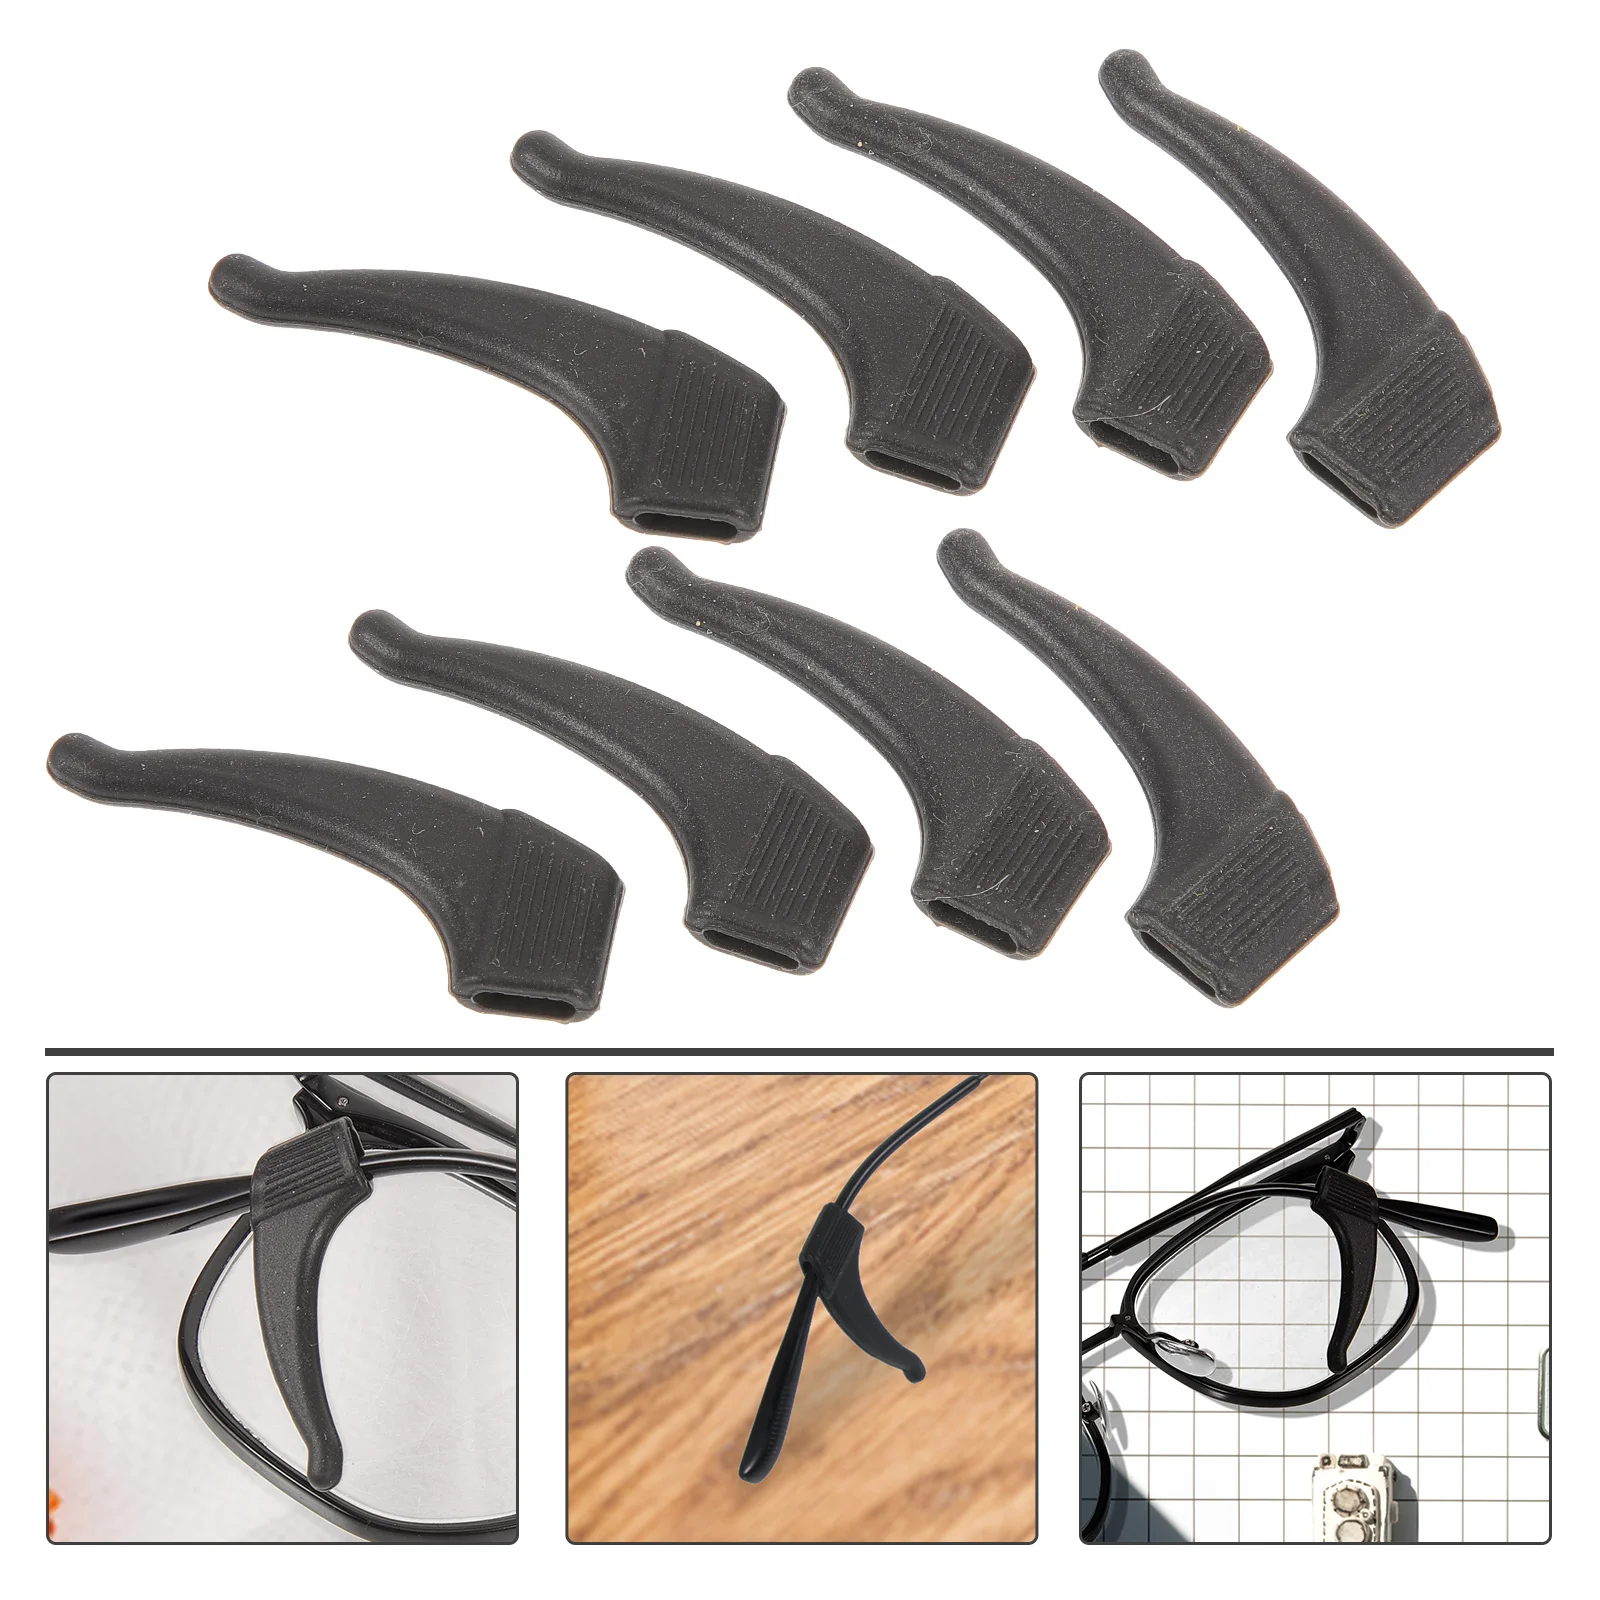 

8 Pcs Anti-slip Earmuffs Glasses Eyeglasses Hooks Non-slip Grips Anti-skid Cushion Accessory Silicone Replaceable